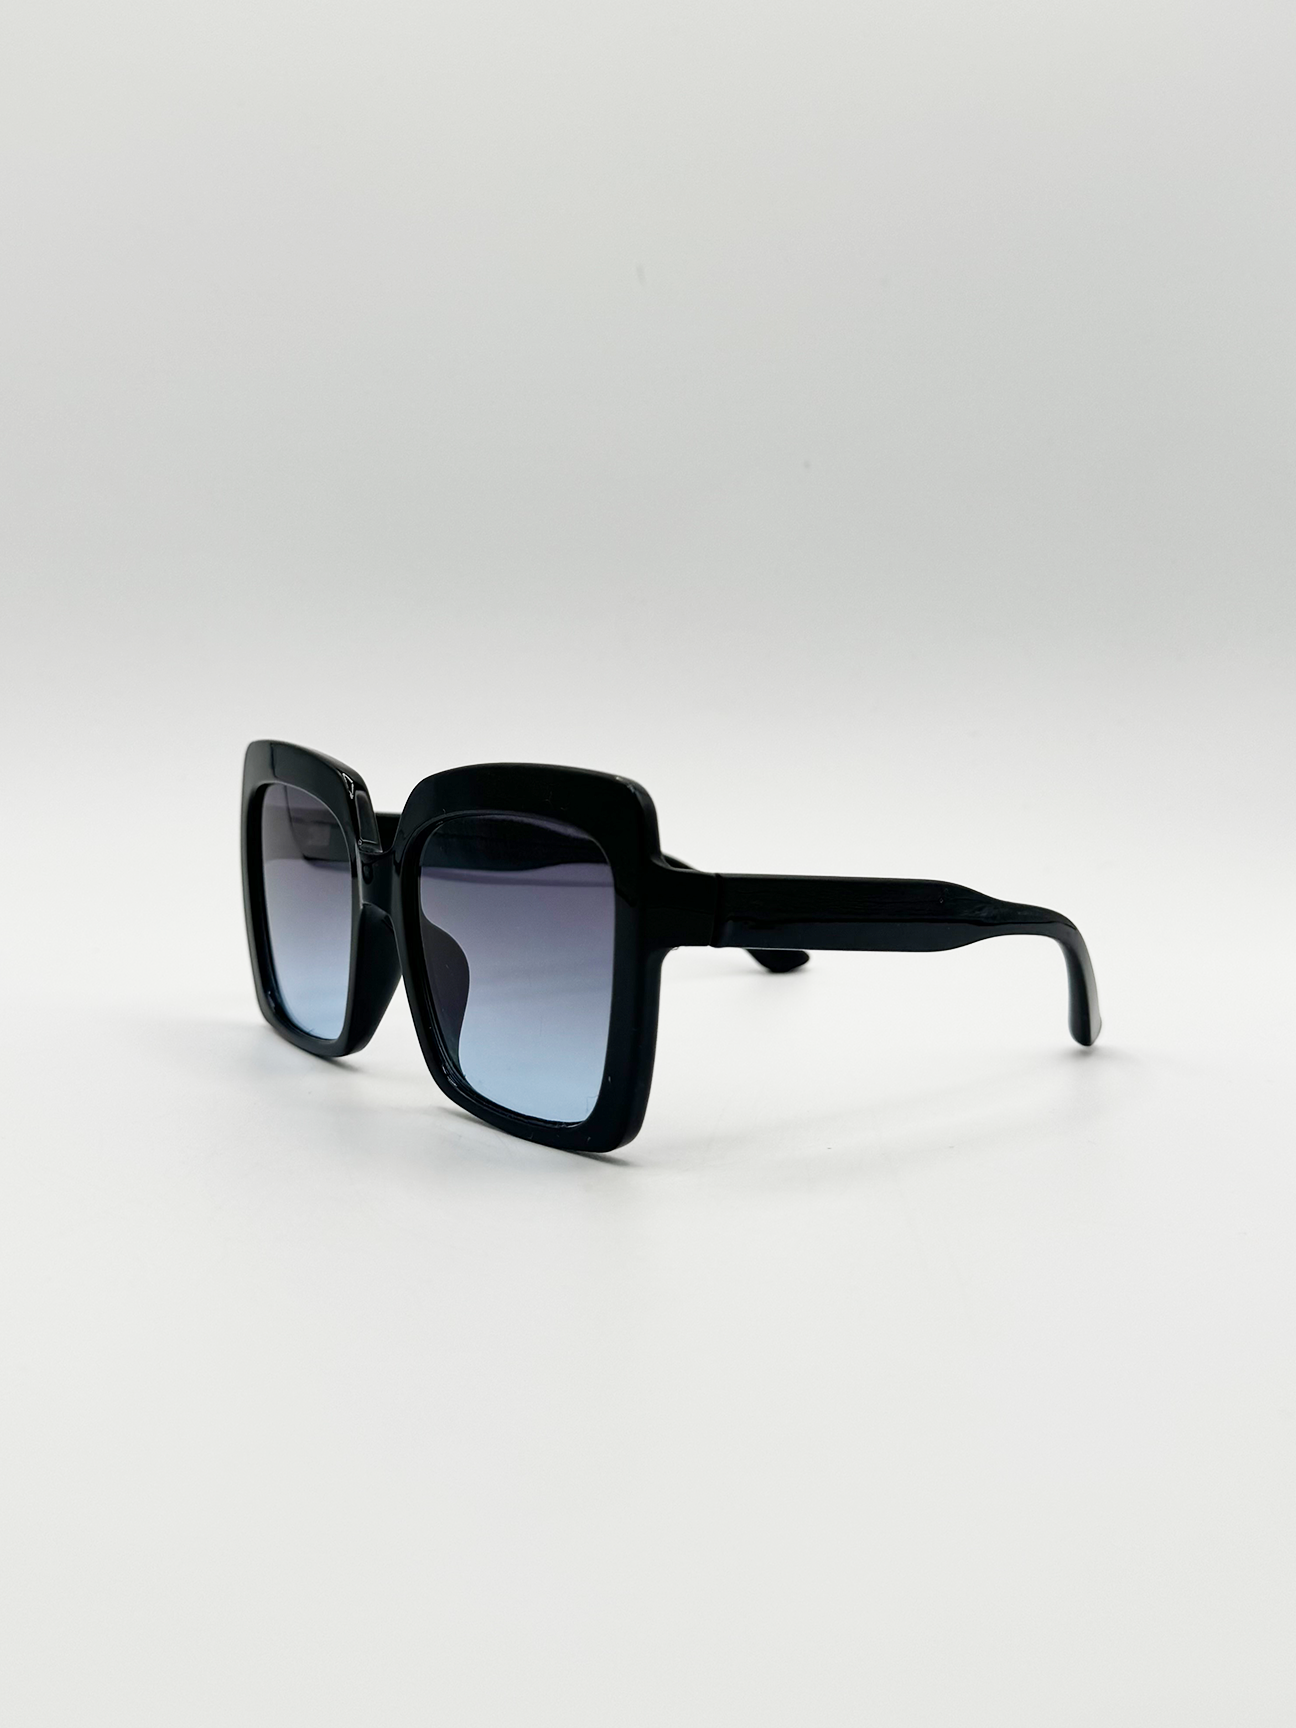 Oversized Black Square sunglasses